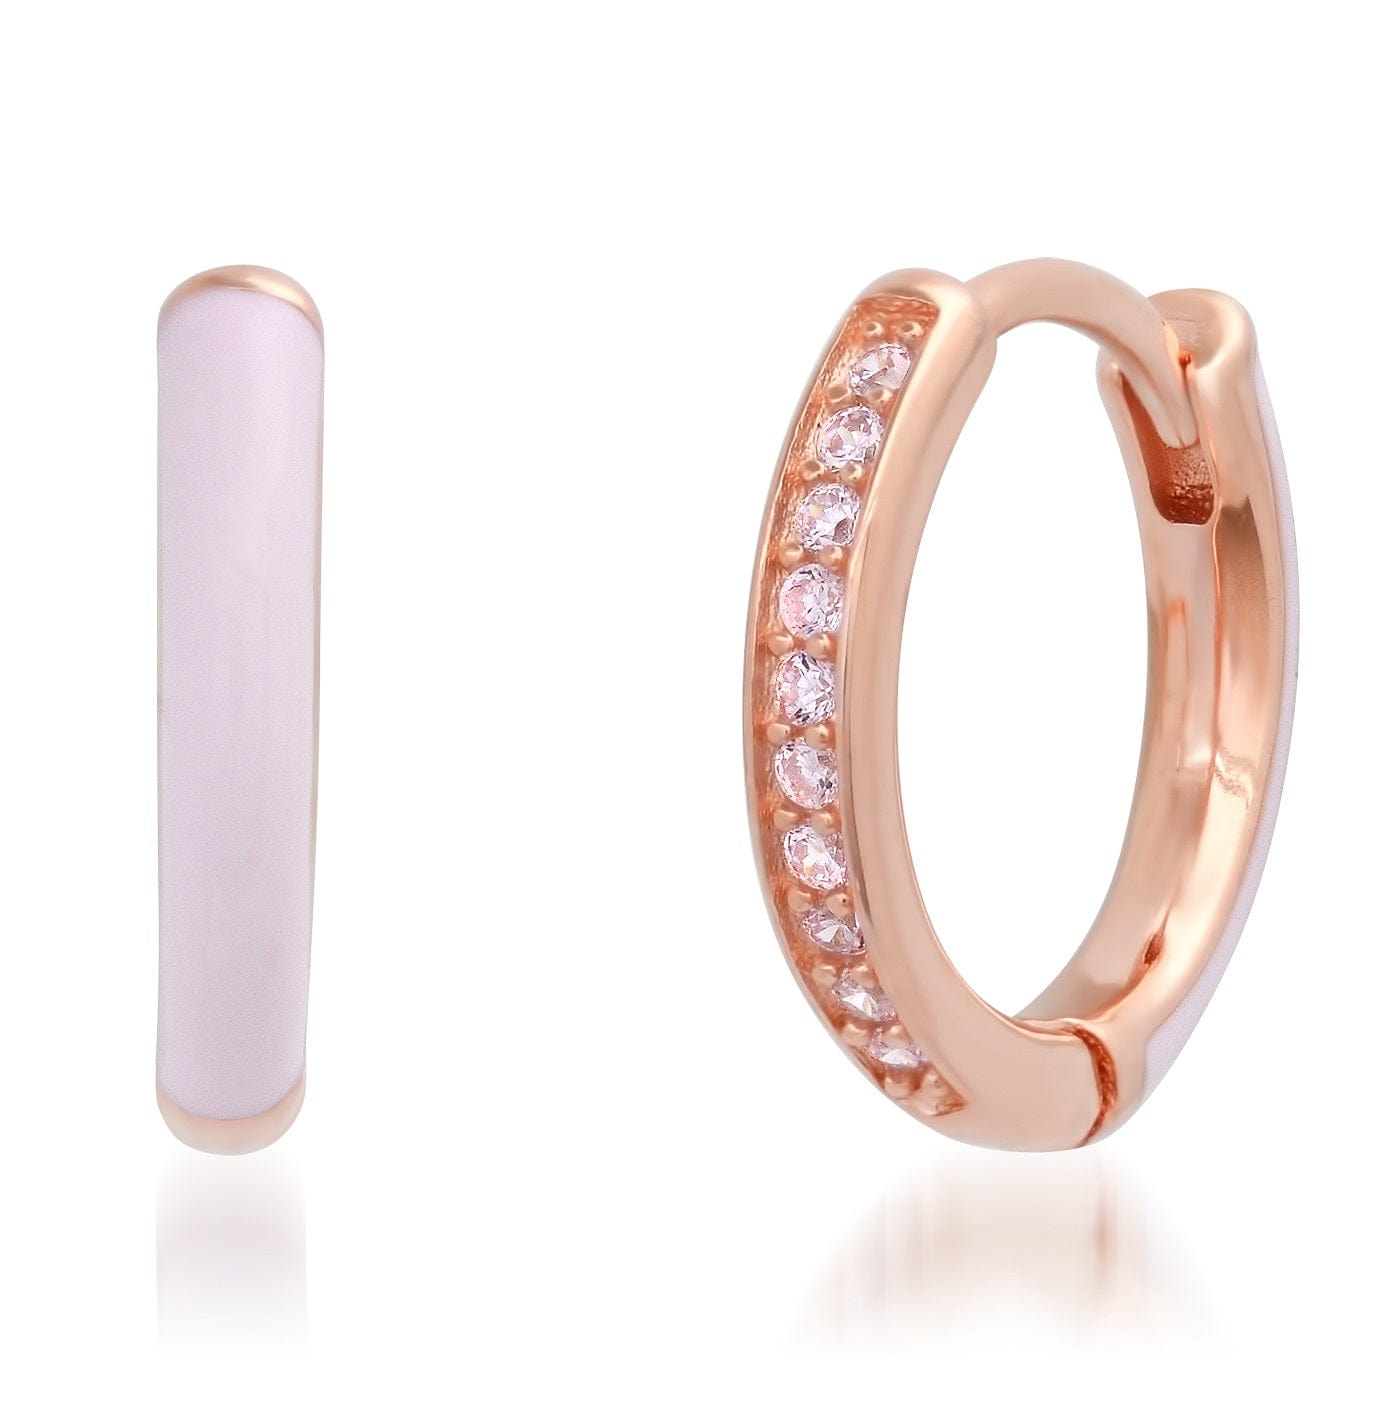 TAI JEWELRY Earrings Pink Pave CZ and Enamel Reversible Huggies